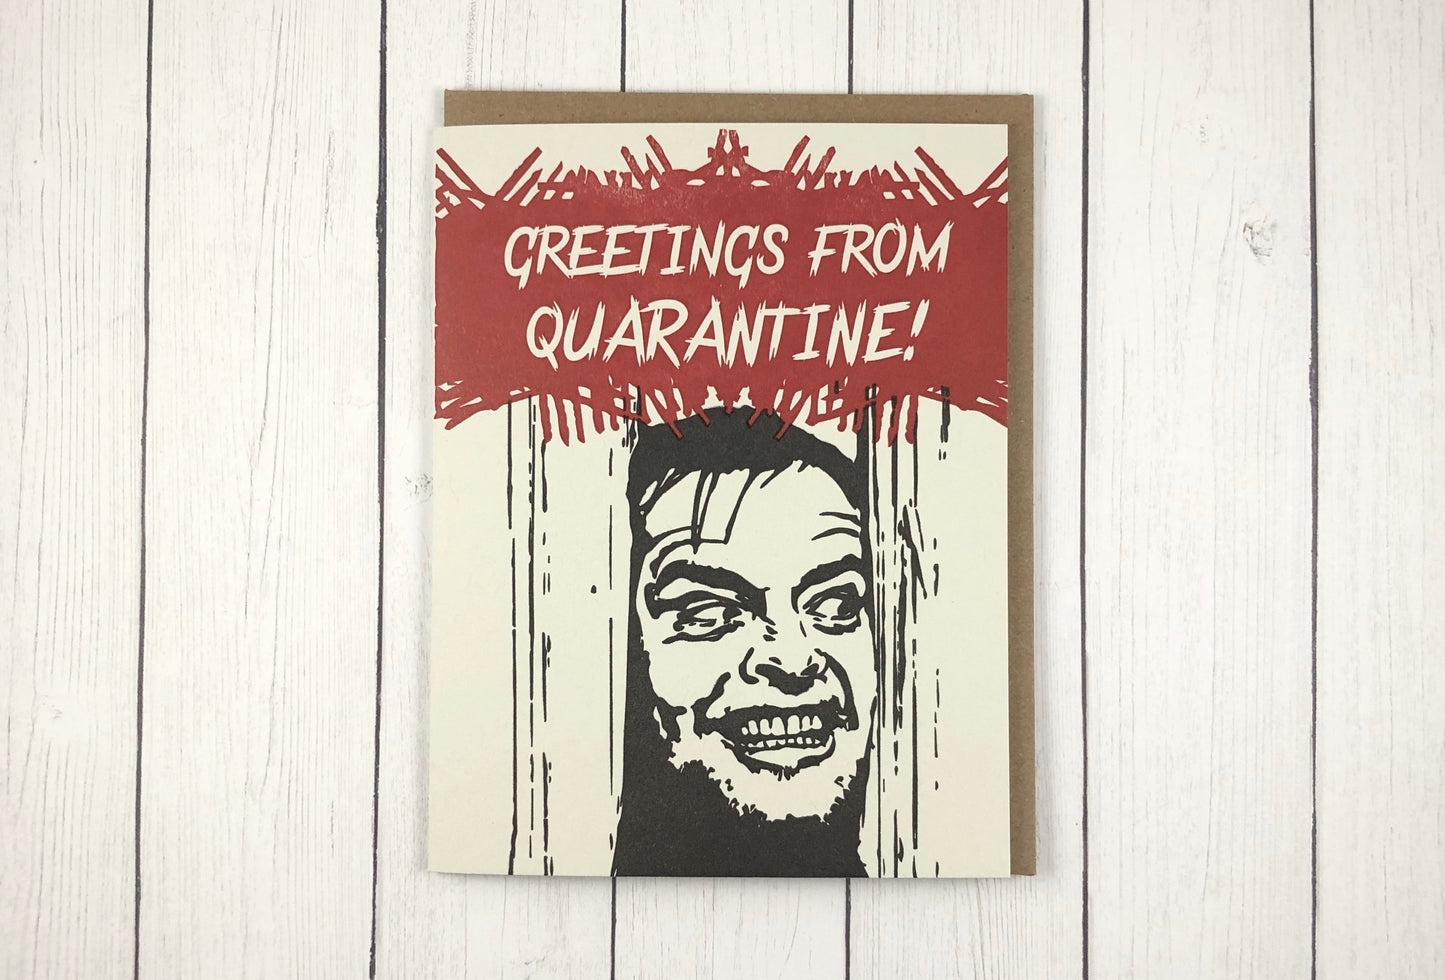 Greetings from Quarantine - Funny Letterpress Greeting Card